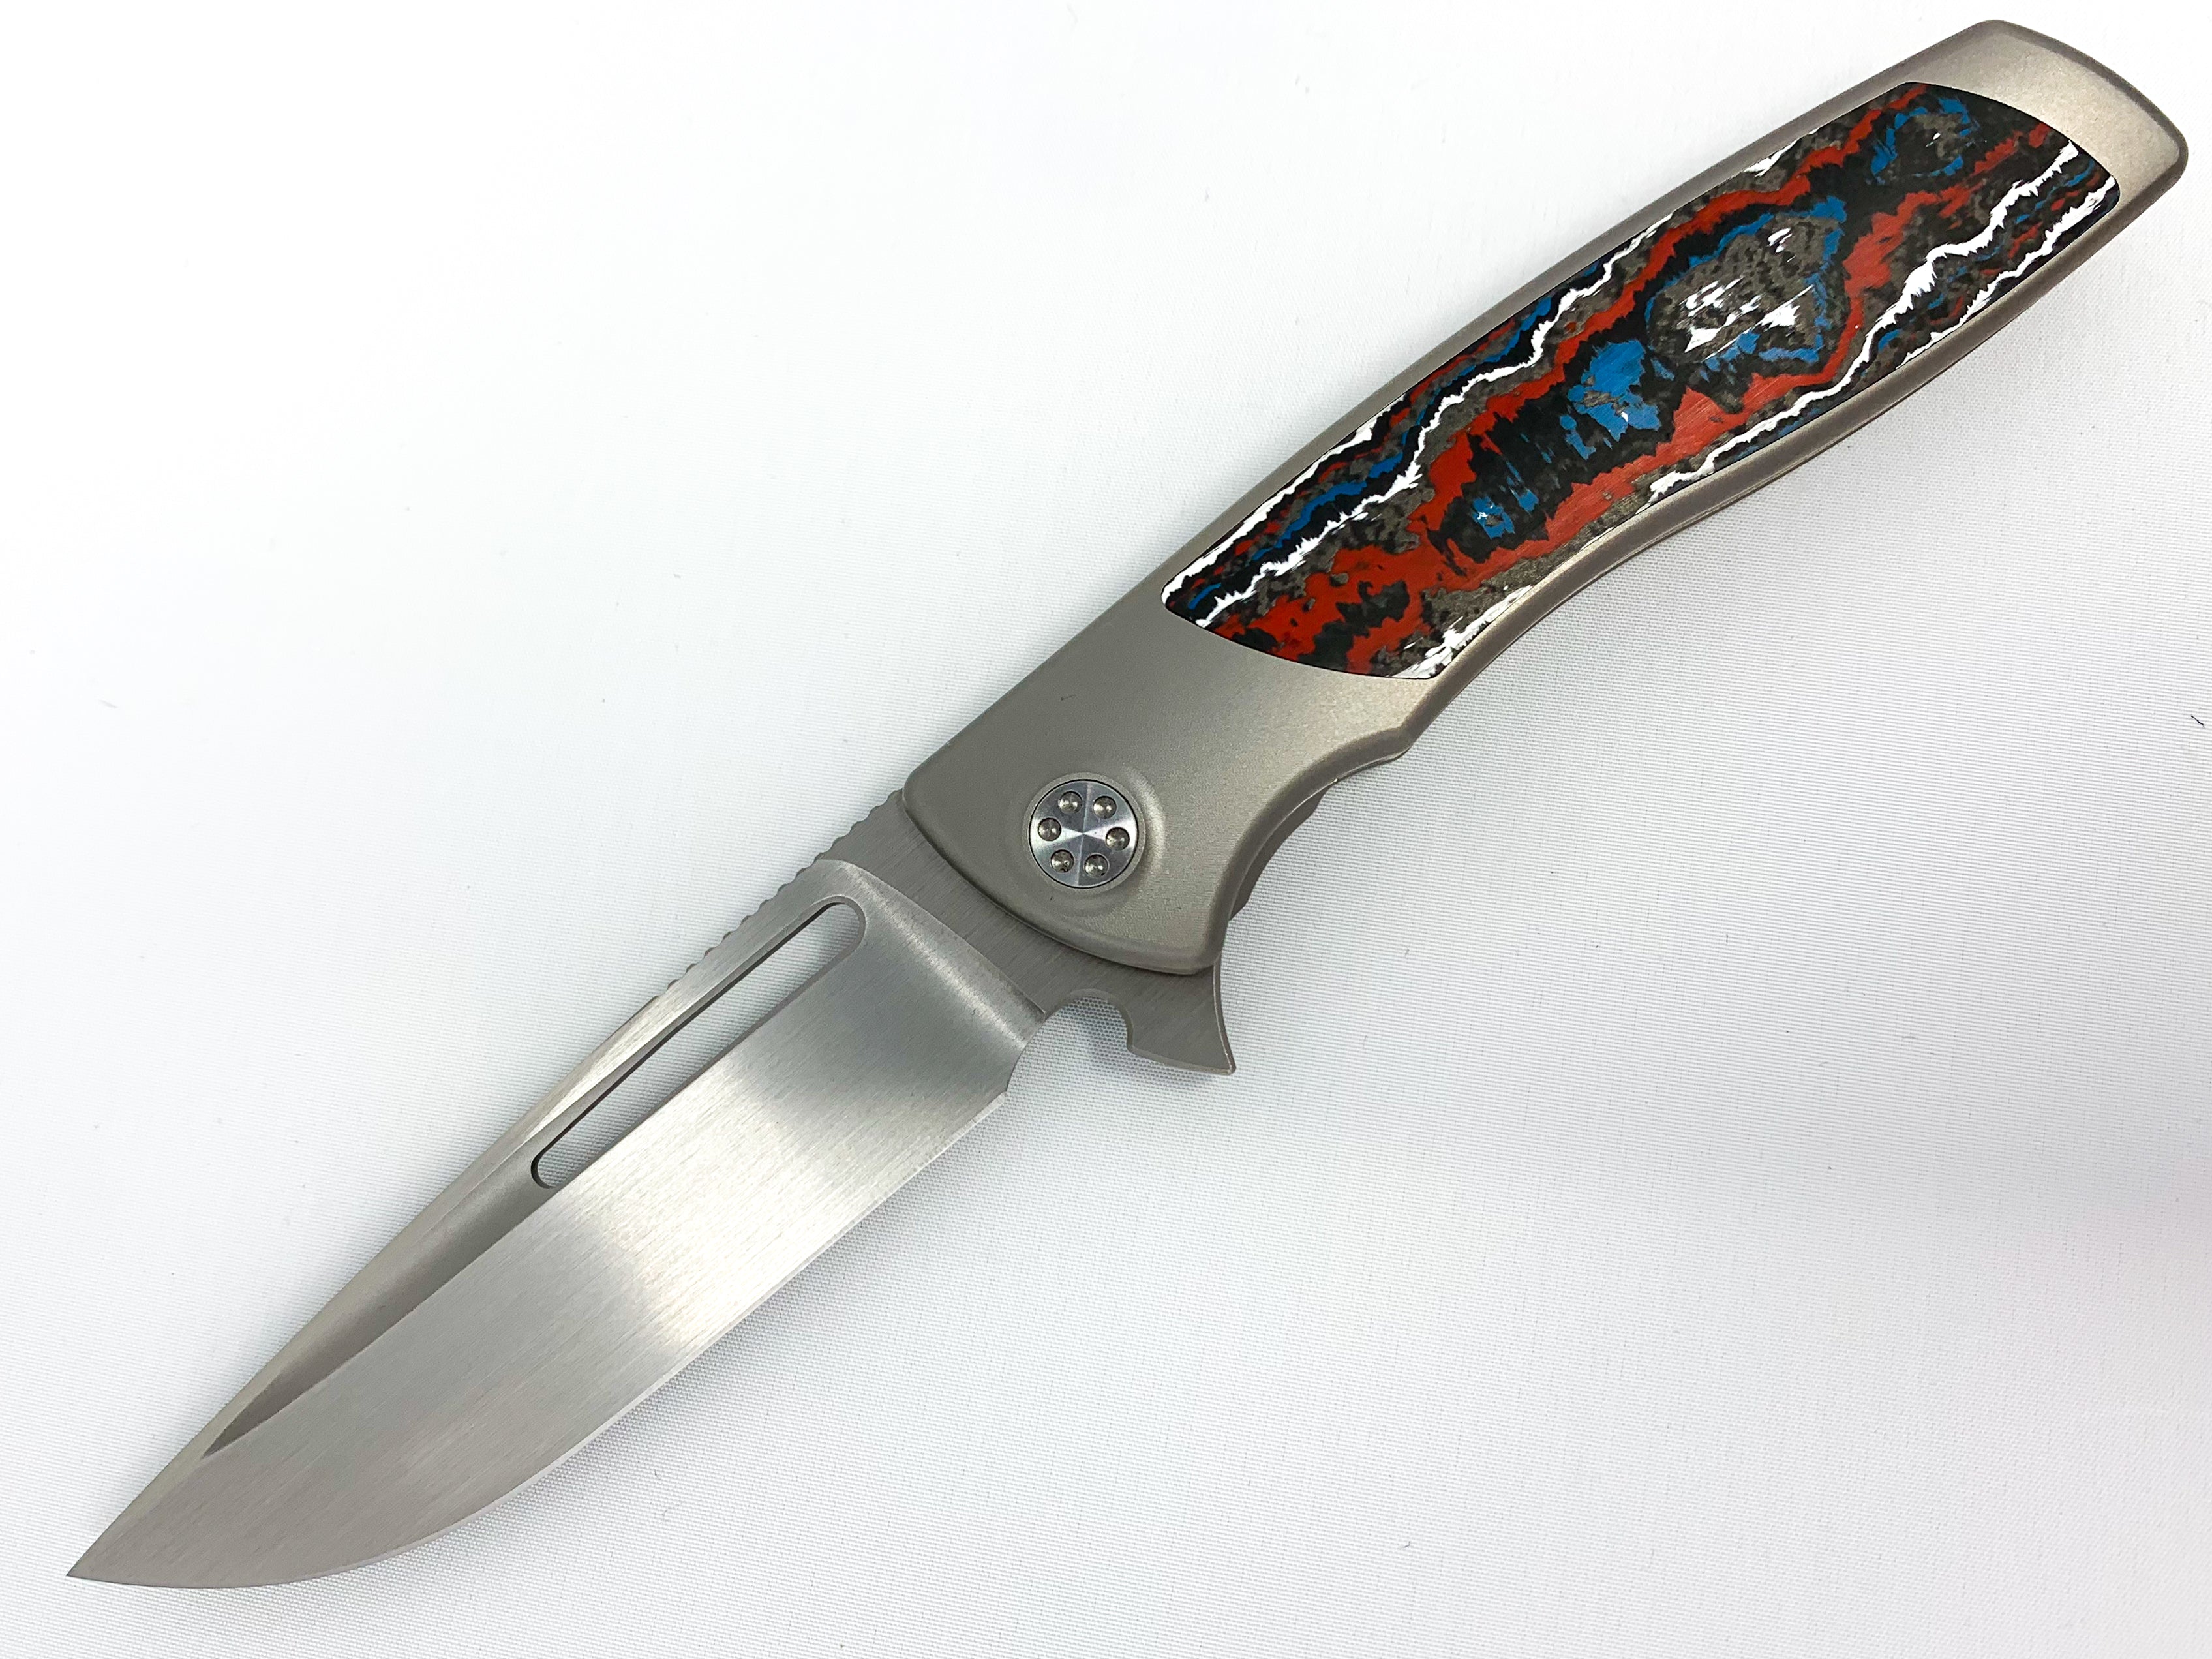 Sharp By Design Mini Evo - M390 Drop Point Blade - Fat Carbon "Nebula" Inlay - Titanium Handle